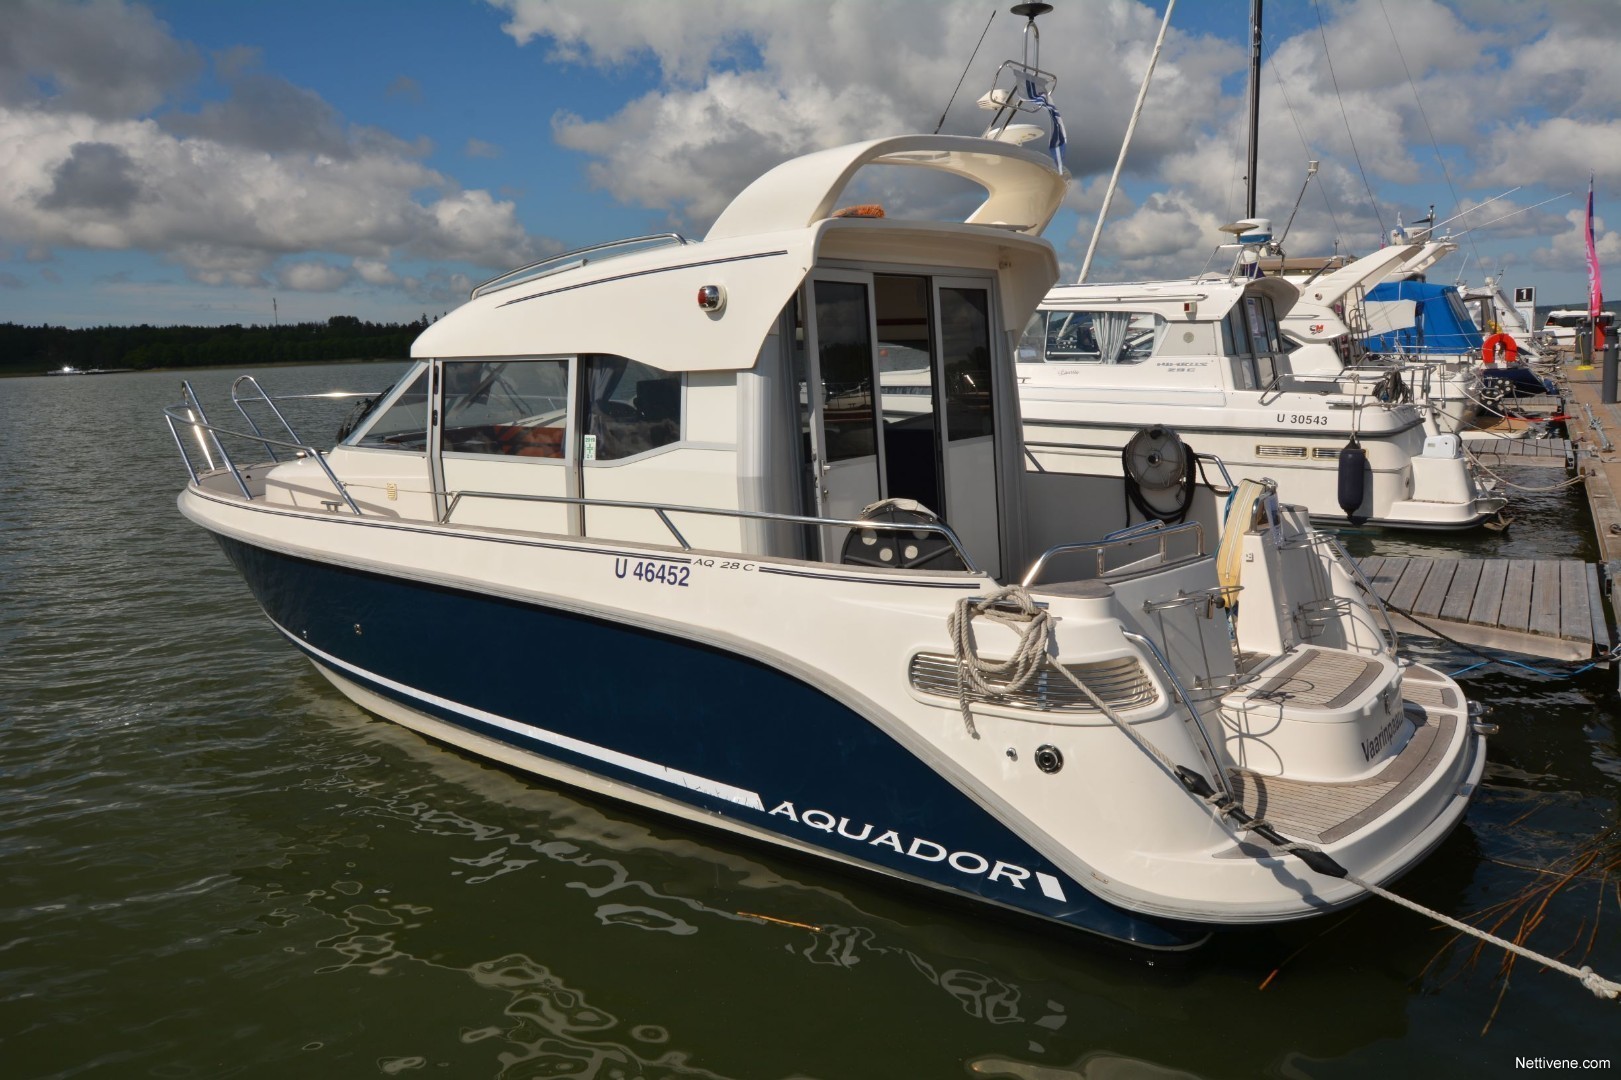 Nyt myynnissä Aquador 28 C motor boat 28 C - Hanko, Uusimaa. 